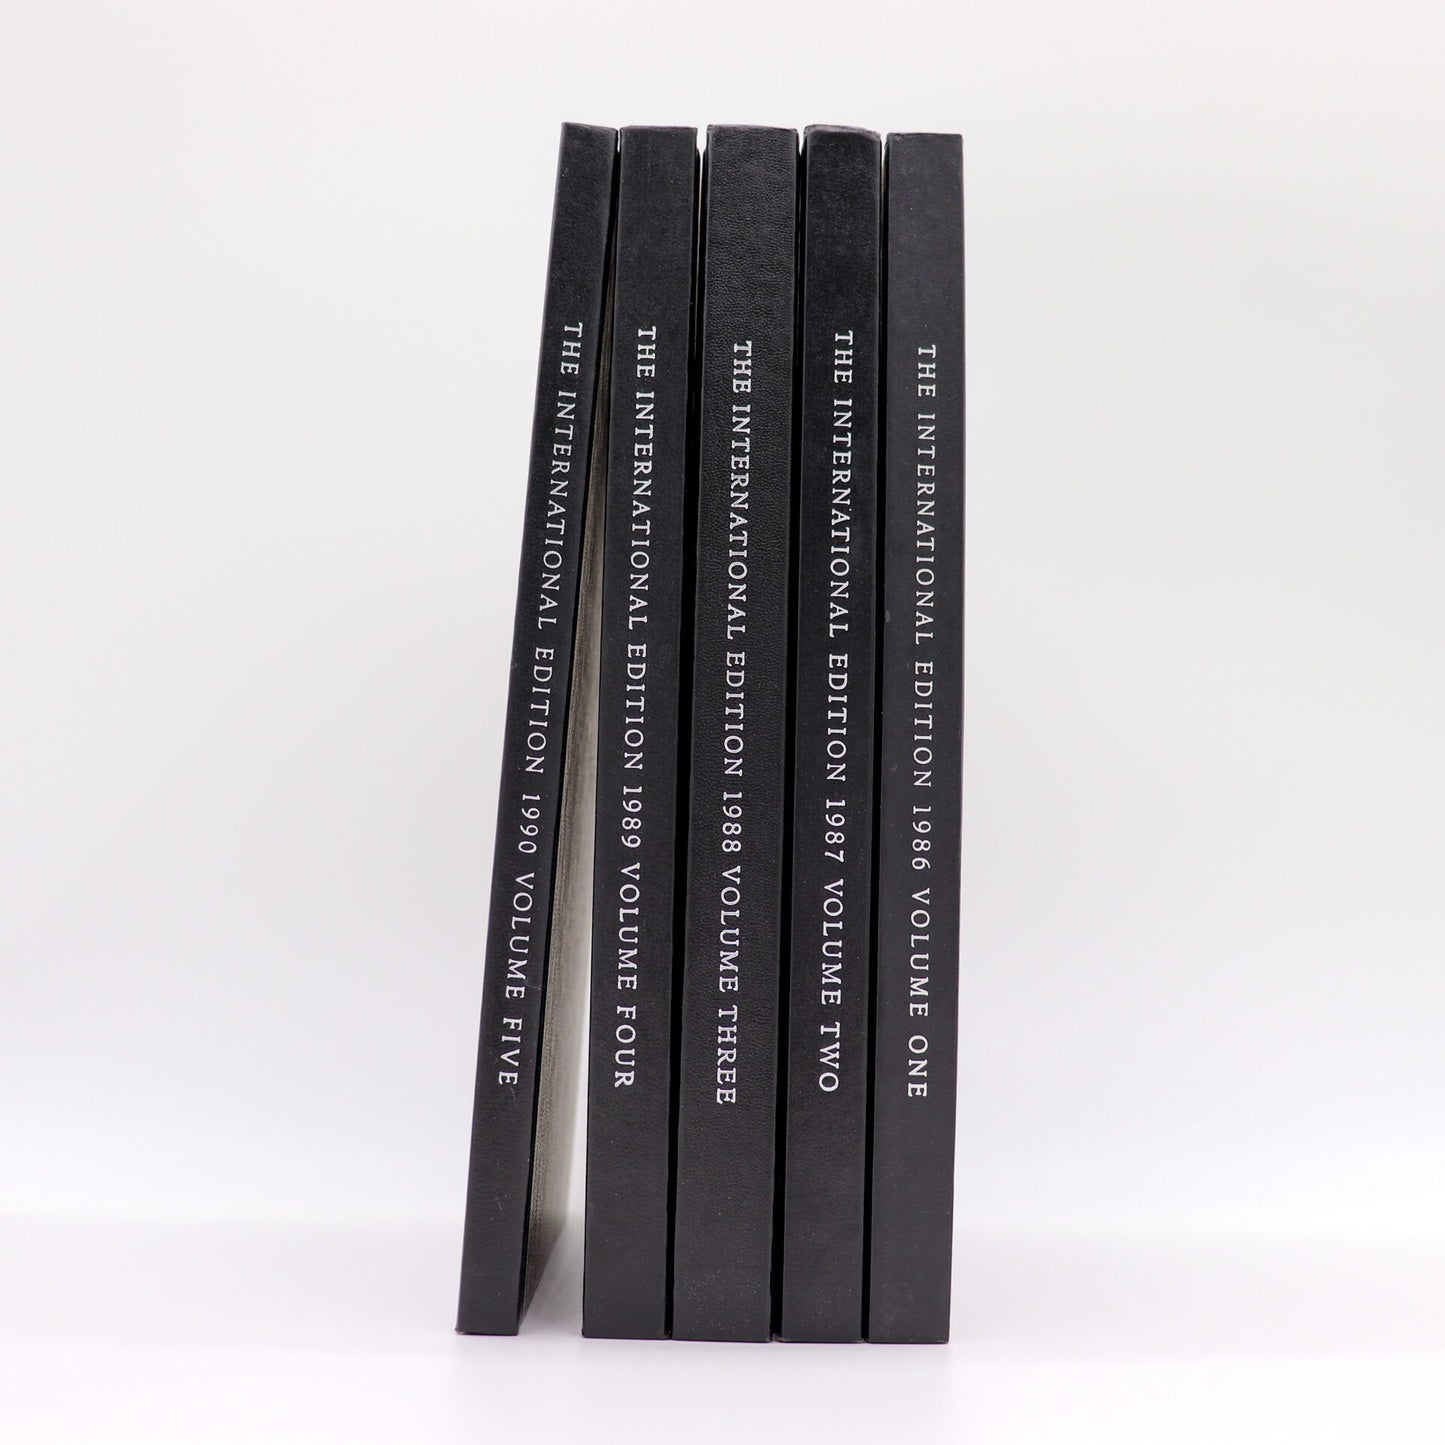 The International Edition Volumes One Thru Five (New)